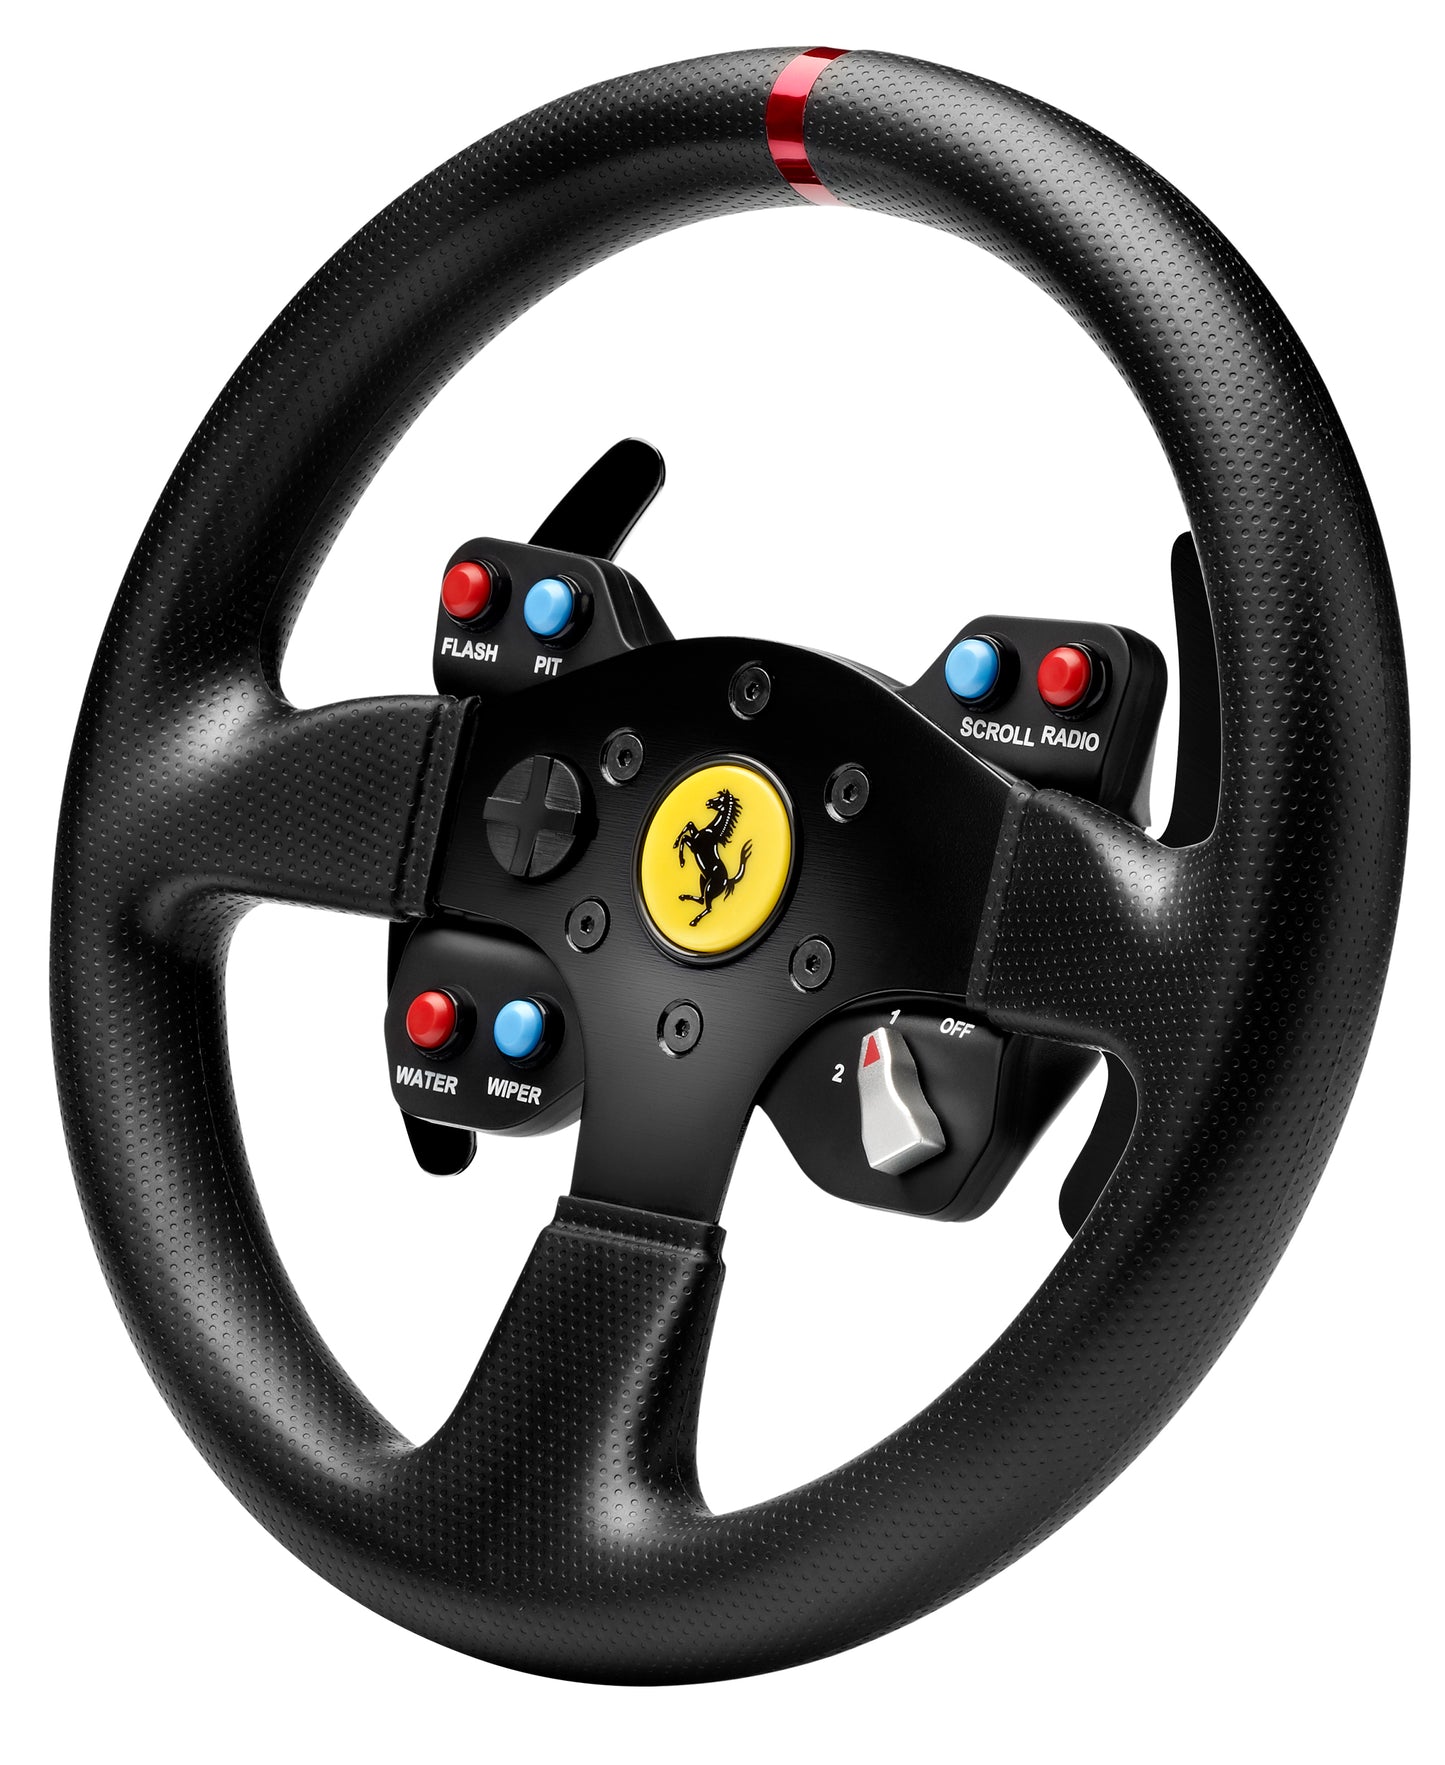 Ferrari GTE Wheel Add-on - 458 CHALLENGE replica wheel